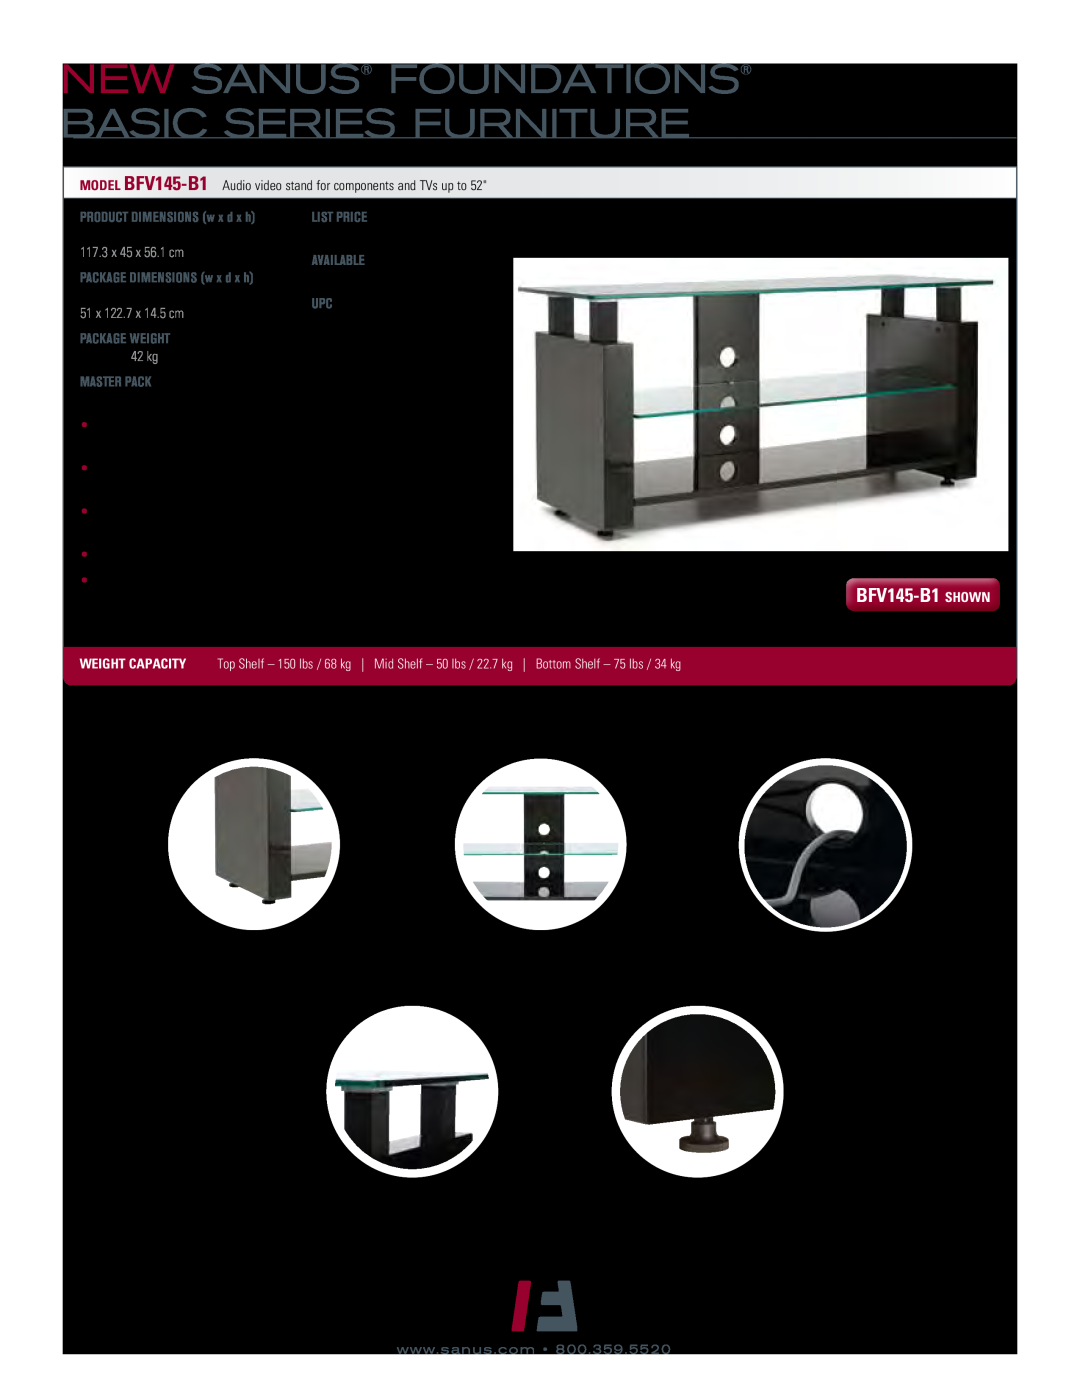 Sanus Systems NEW sanus FOUNDATIONS Basic Series Furniture, BFV145-B1 shown, 117.3 x 45 x 56.1 cm, 51 x 122.7 x 14.5 cm 